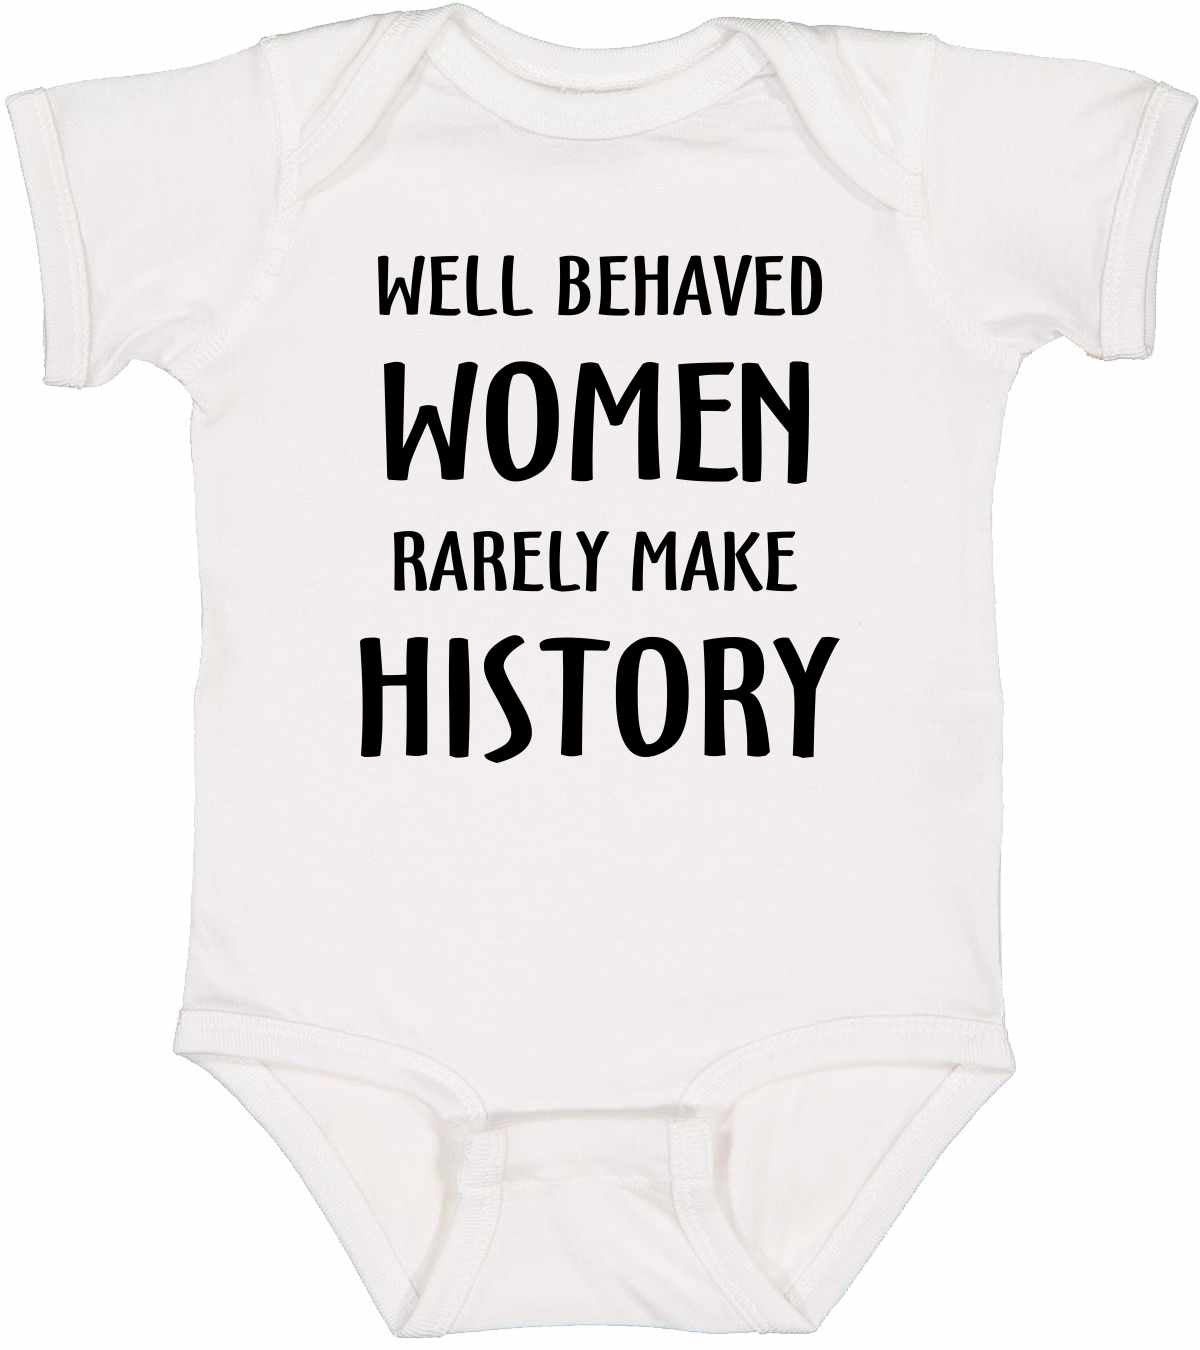 WELL BEHAVED WOMEN RARELY MAKE HISTORY Infant BodySuit (#332-10)